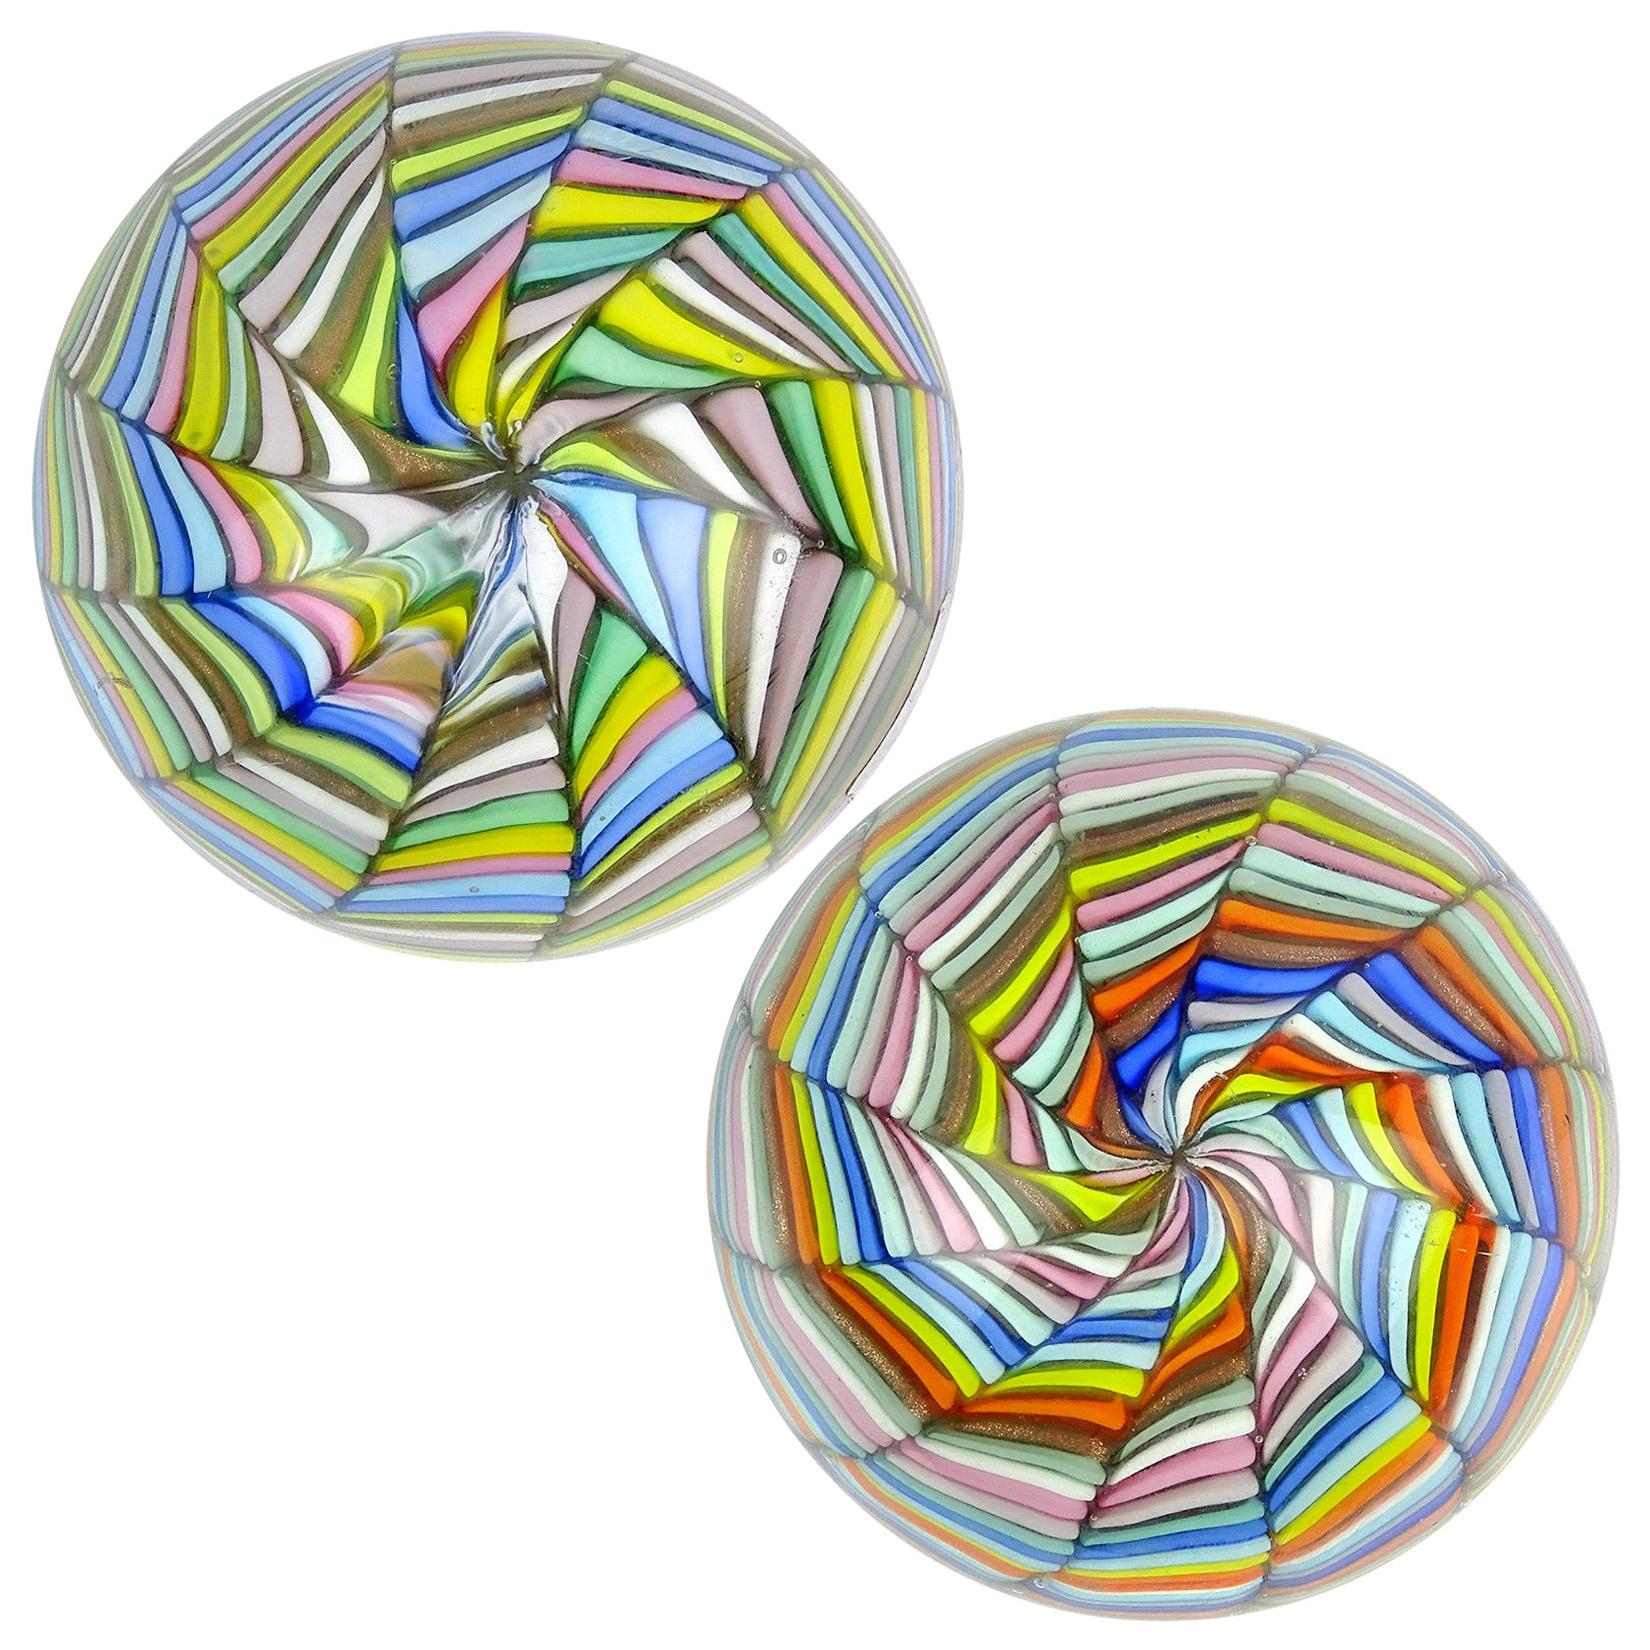 Fratelli Toso Murano Rainbow Stripes Ribbons Italian Art Glass Paperweights